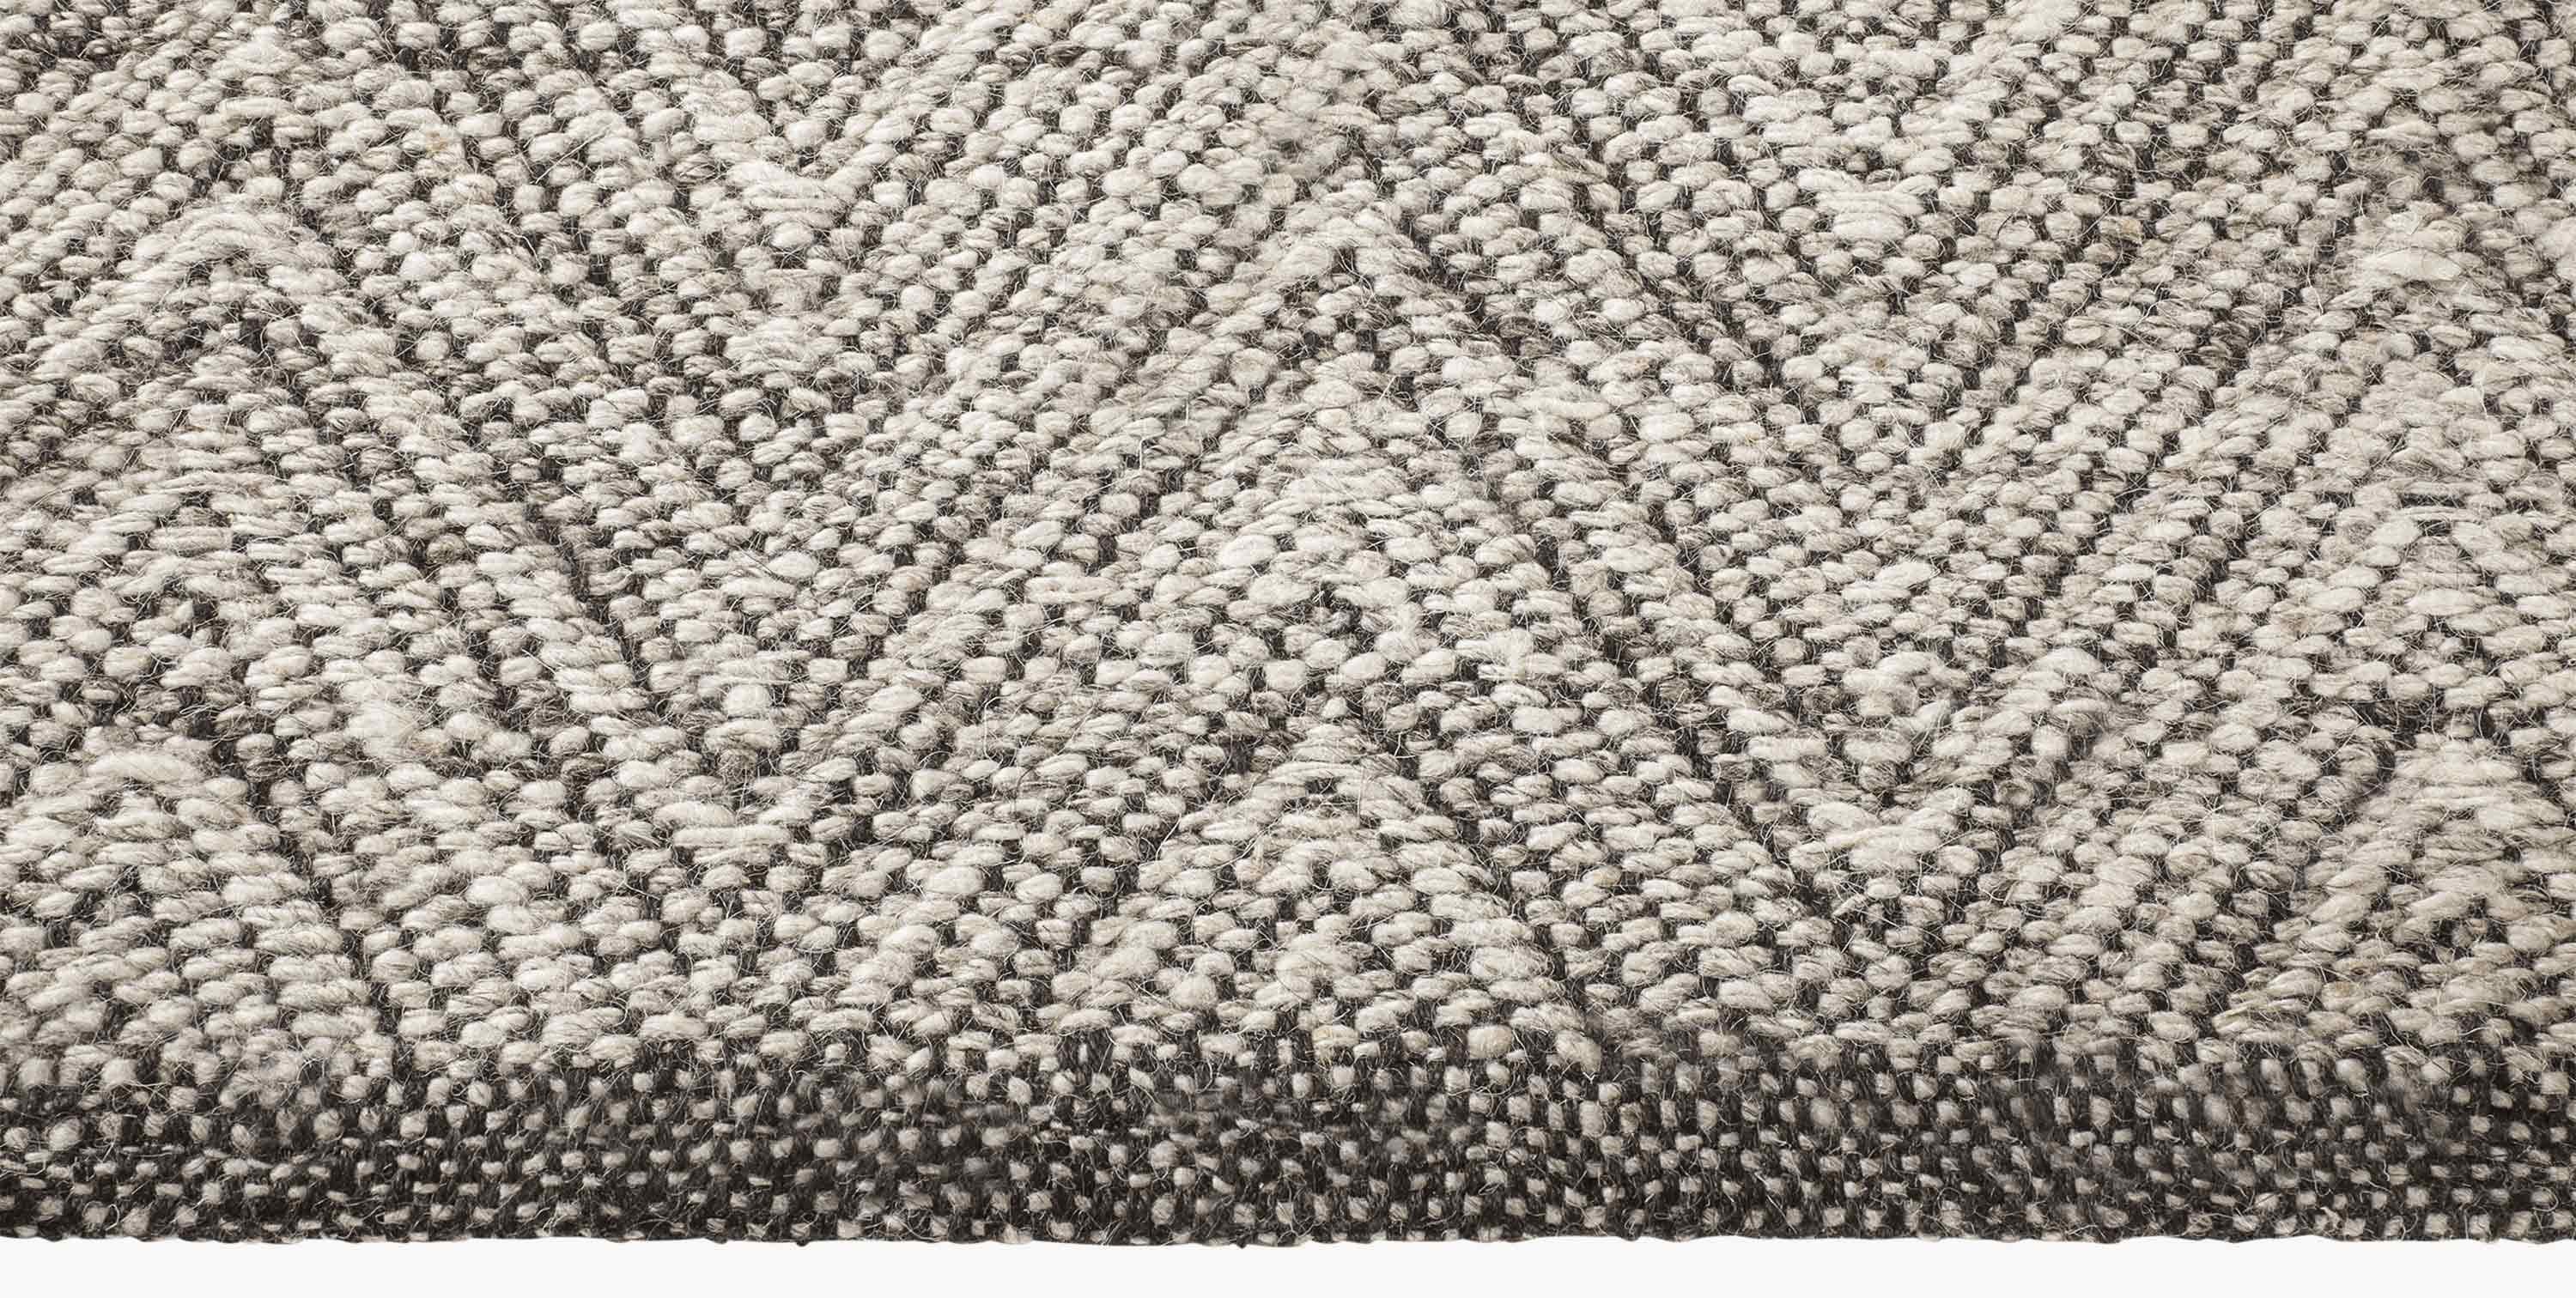 For Sale: Beige (Sand) Ben Soleimani Ceyah Rug– Hand-woven Plush Textured Wool + Linen Charcoal 6'x9' 3